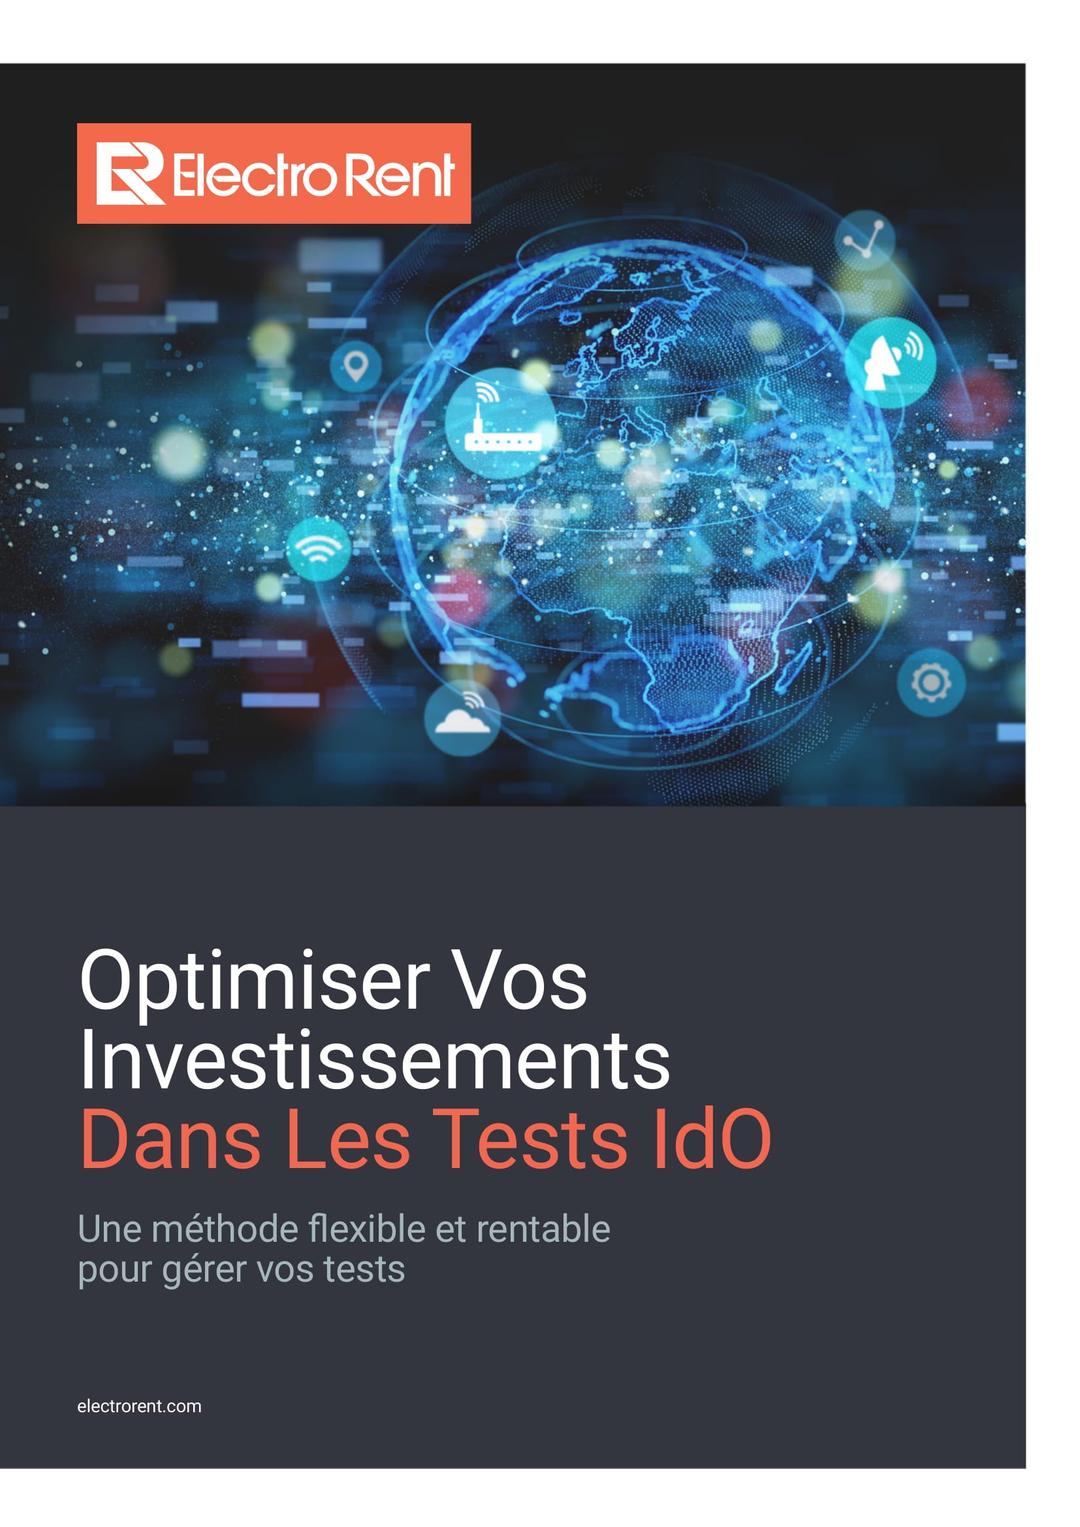 Optimiser Vos Investissements Dans Les Tests IdO, image